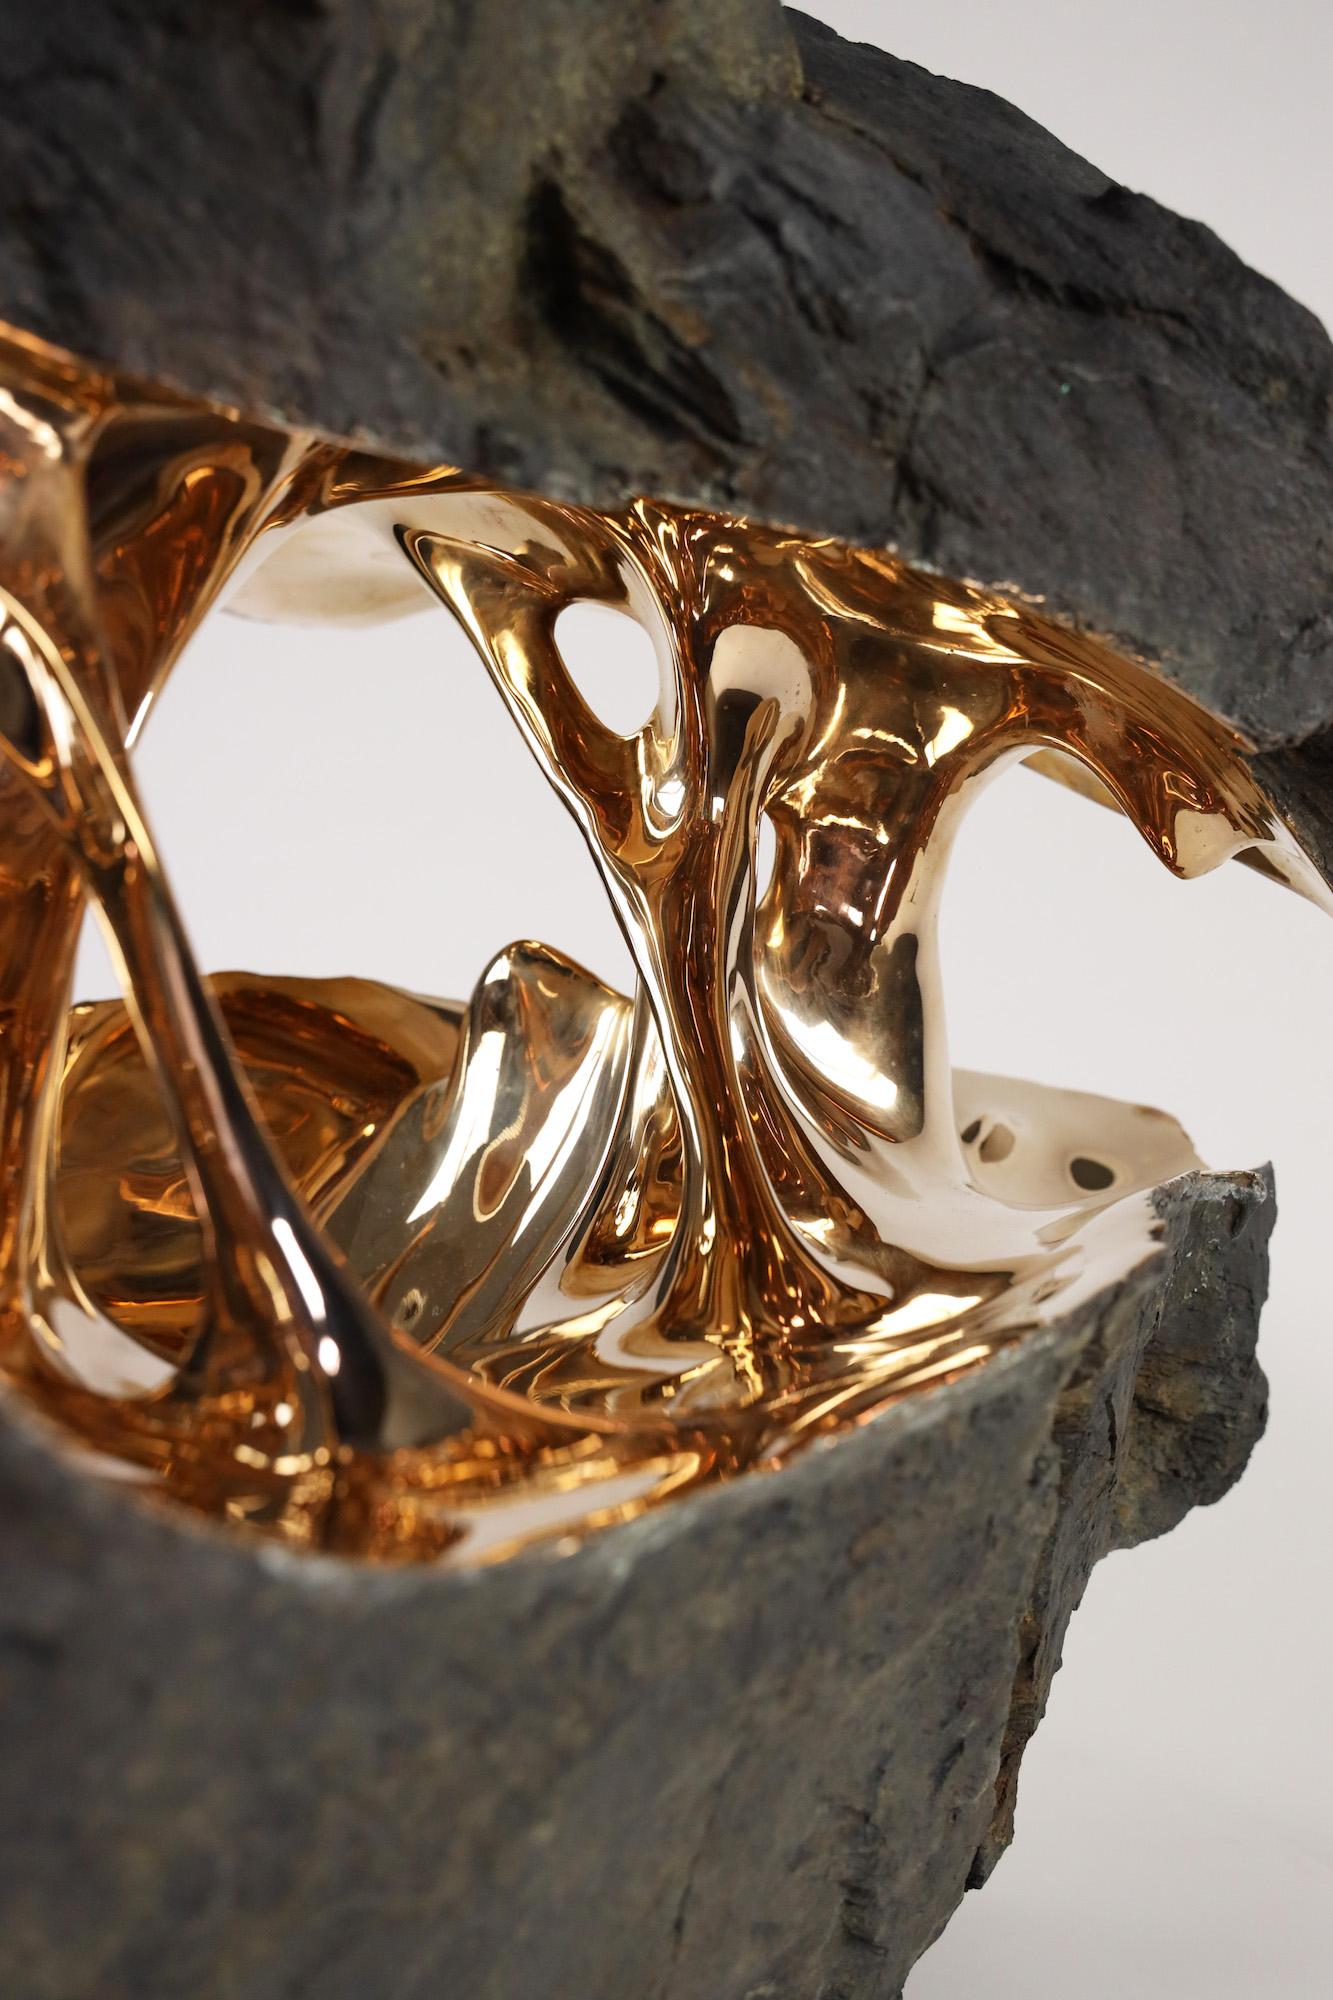 Gaïa by Romain Langlois - Rock-like bronze sculpture, golden, abstract For Sale 9